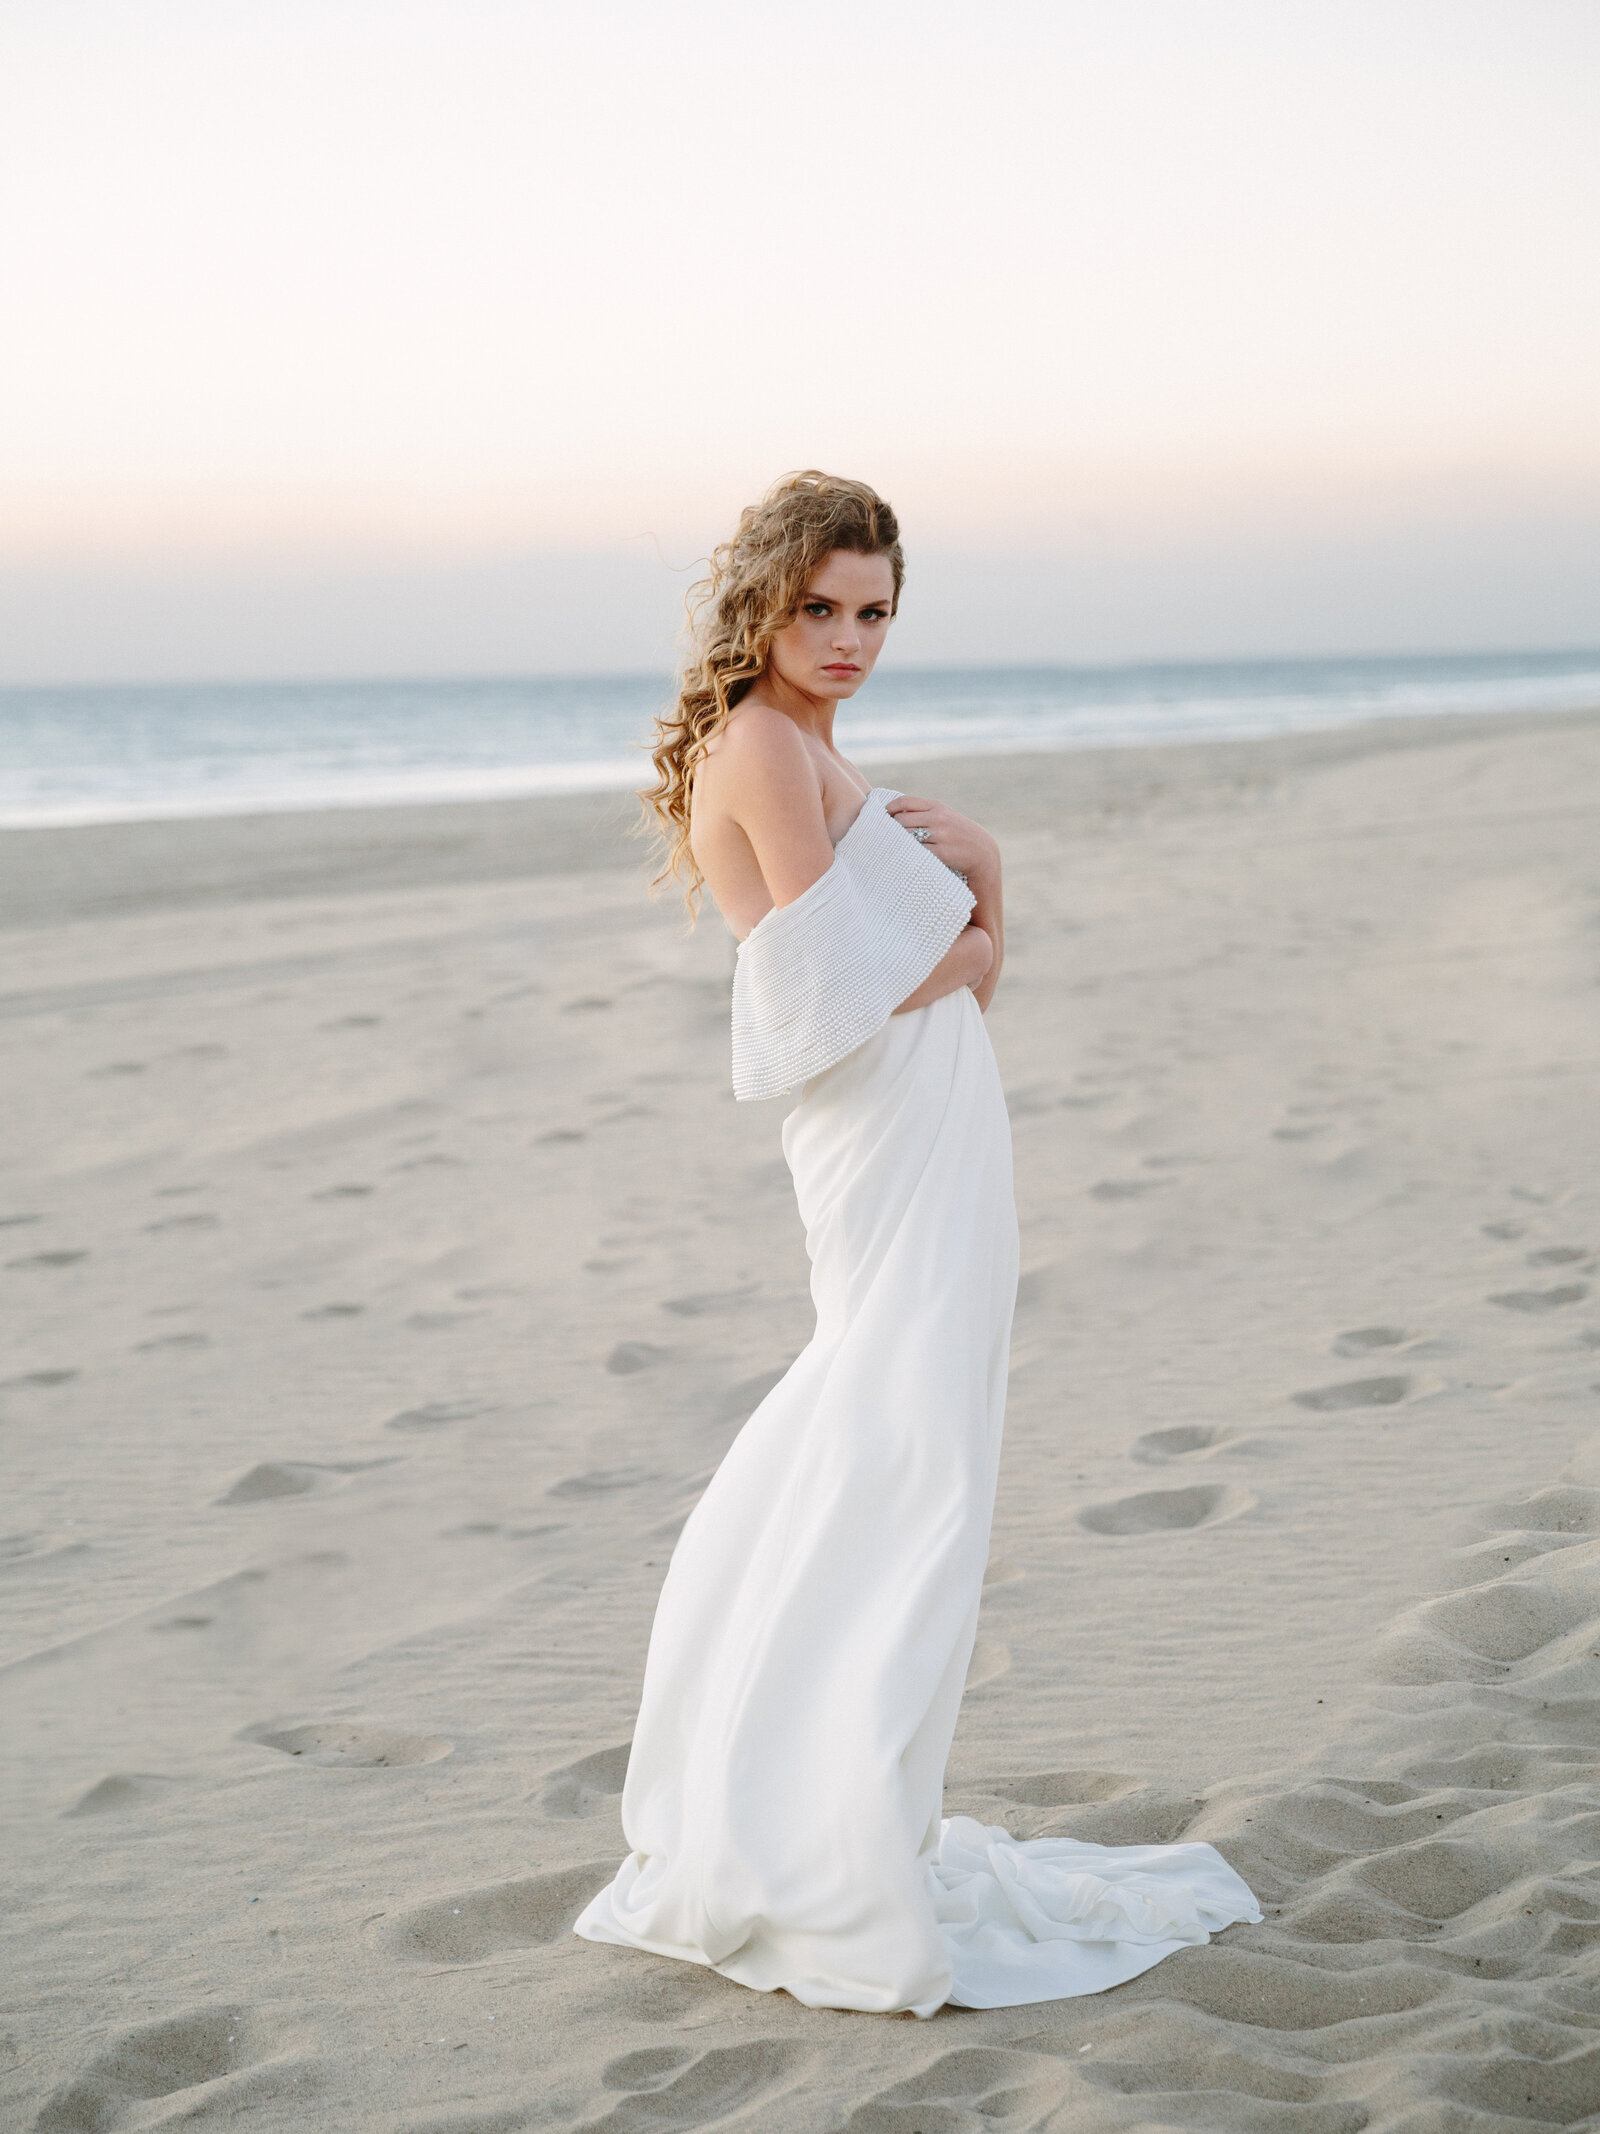 051-larissa-cleveland-editorial-fashion-wedding_photographer-san-francisco-carmel-napa-california-LCphoto-winter-beach-socal-001